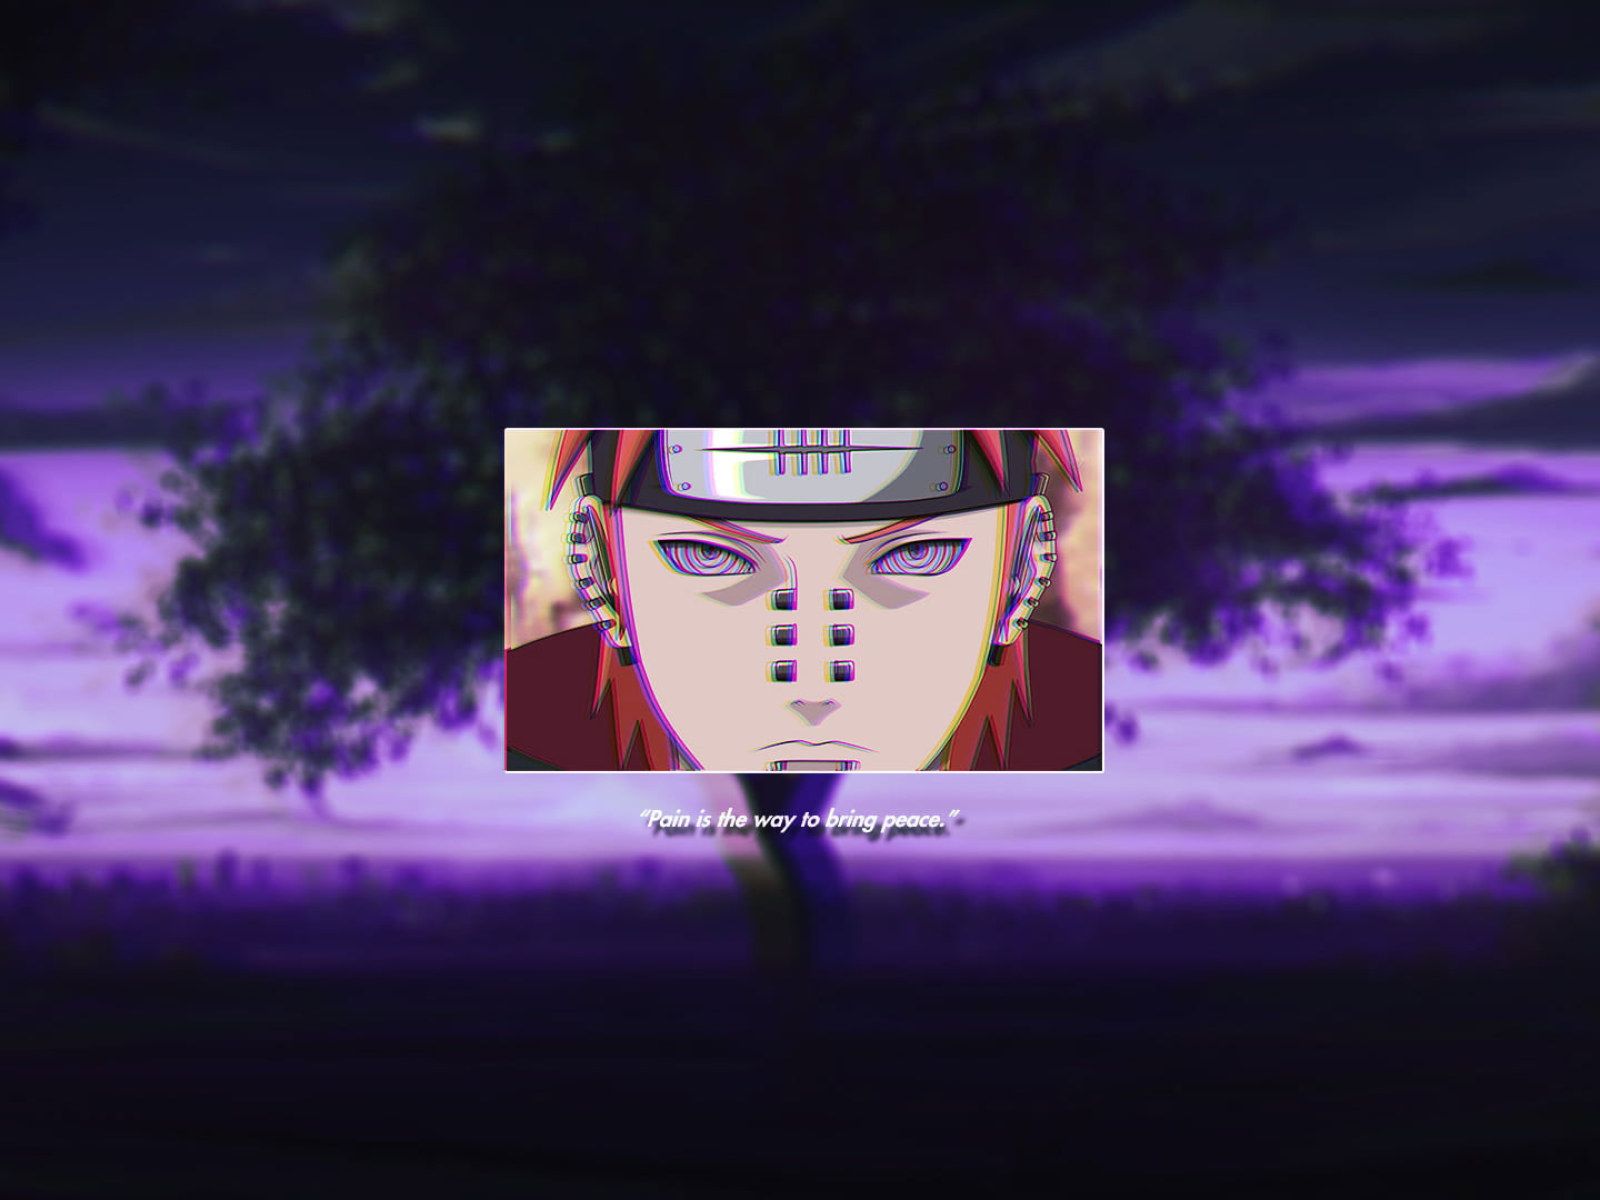 Naruto (anime) wallpaper, purple .wallpaperforu.com